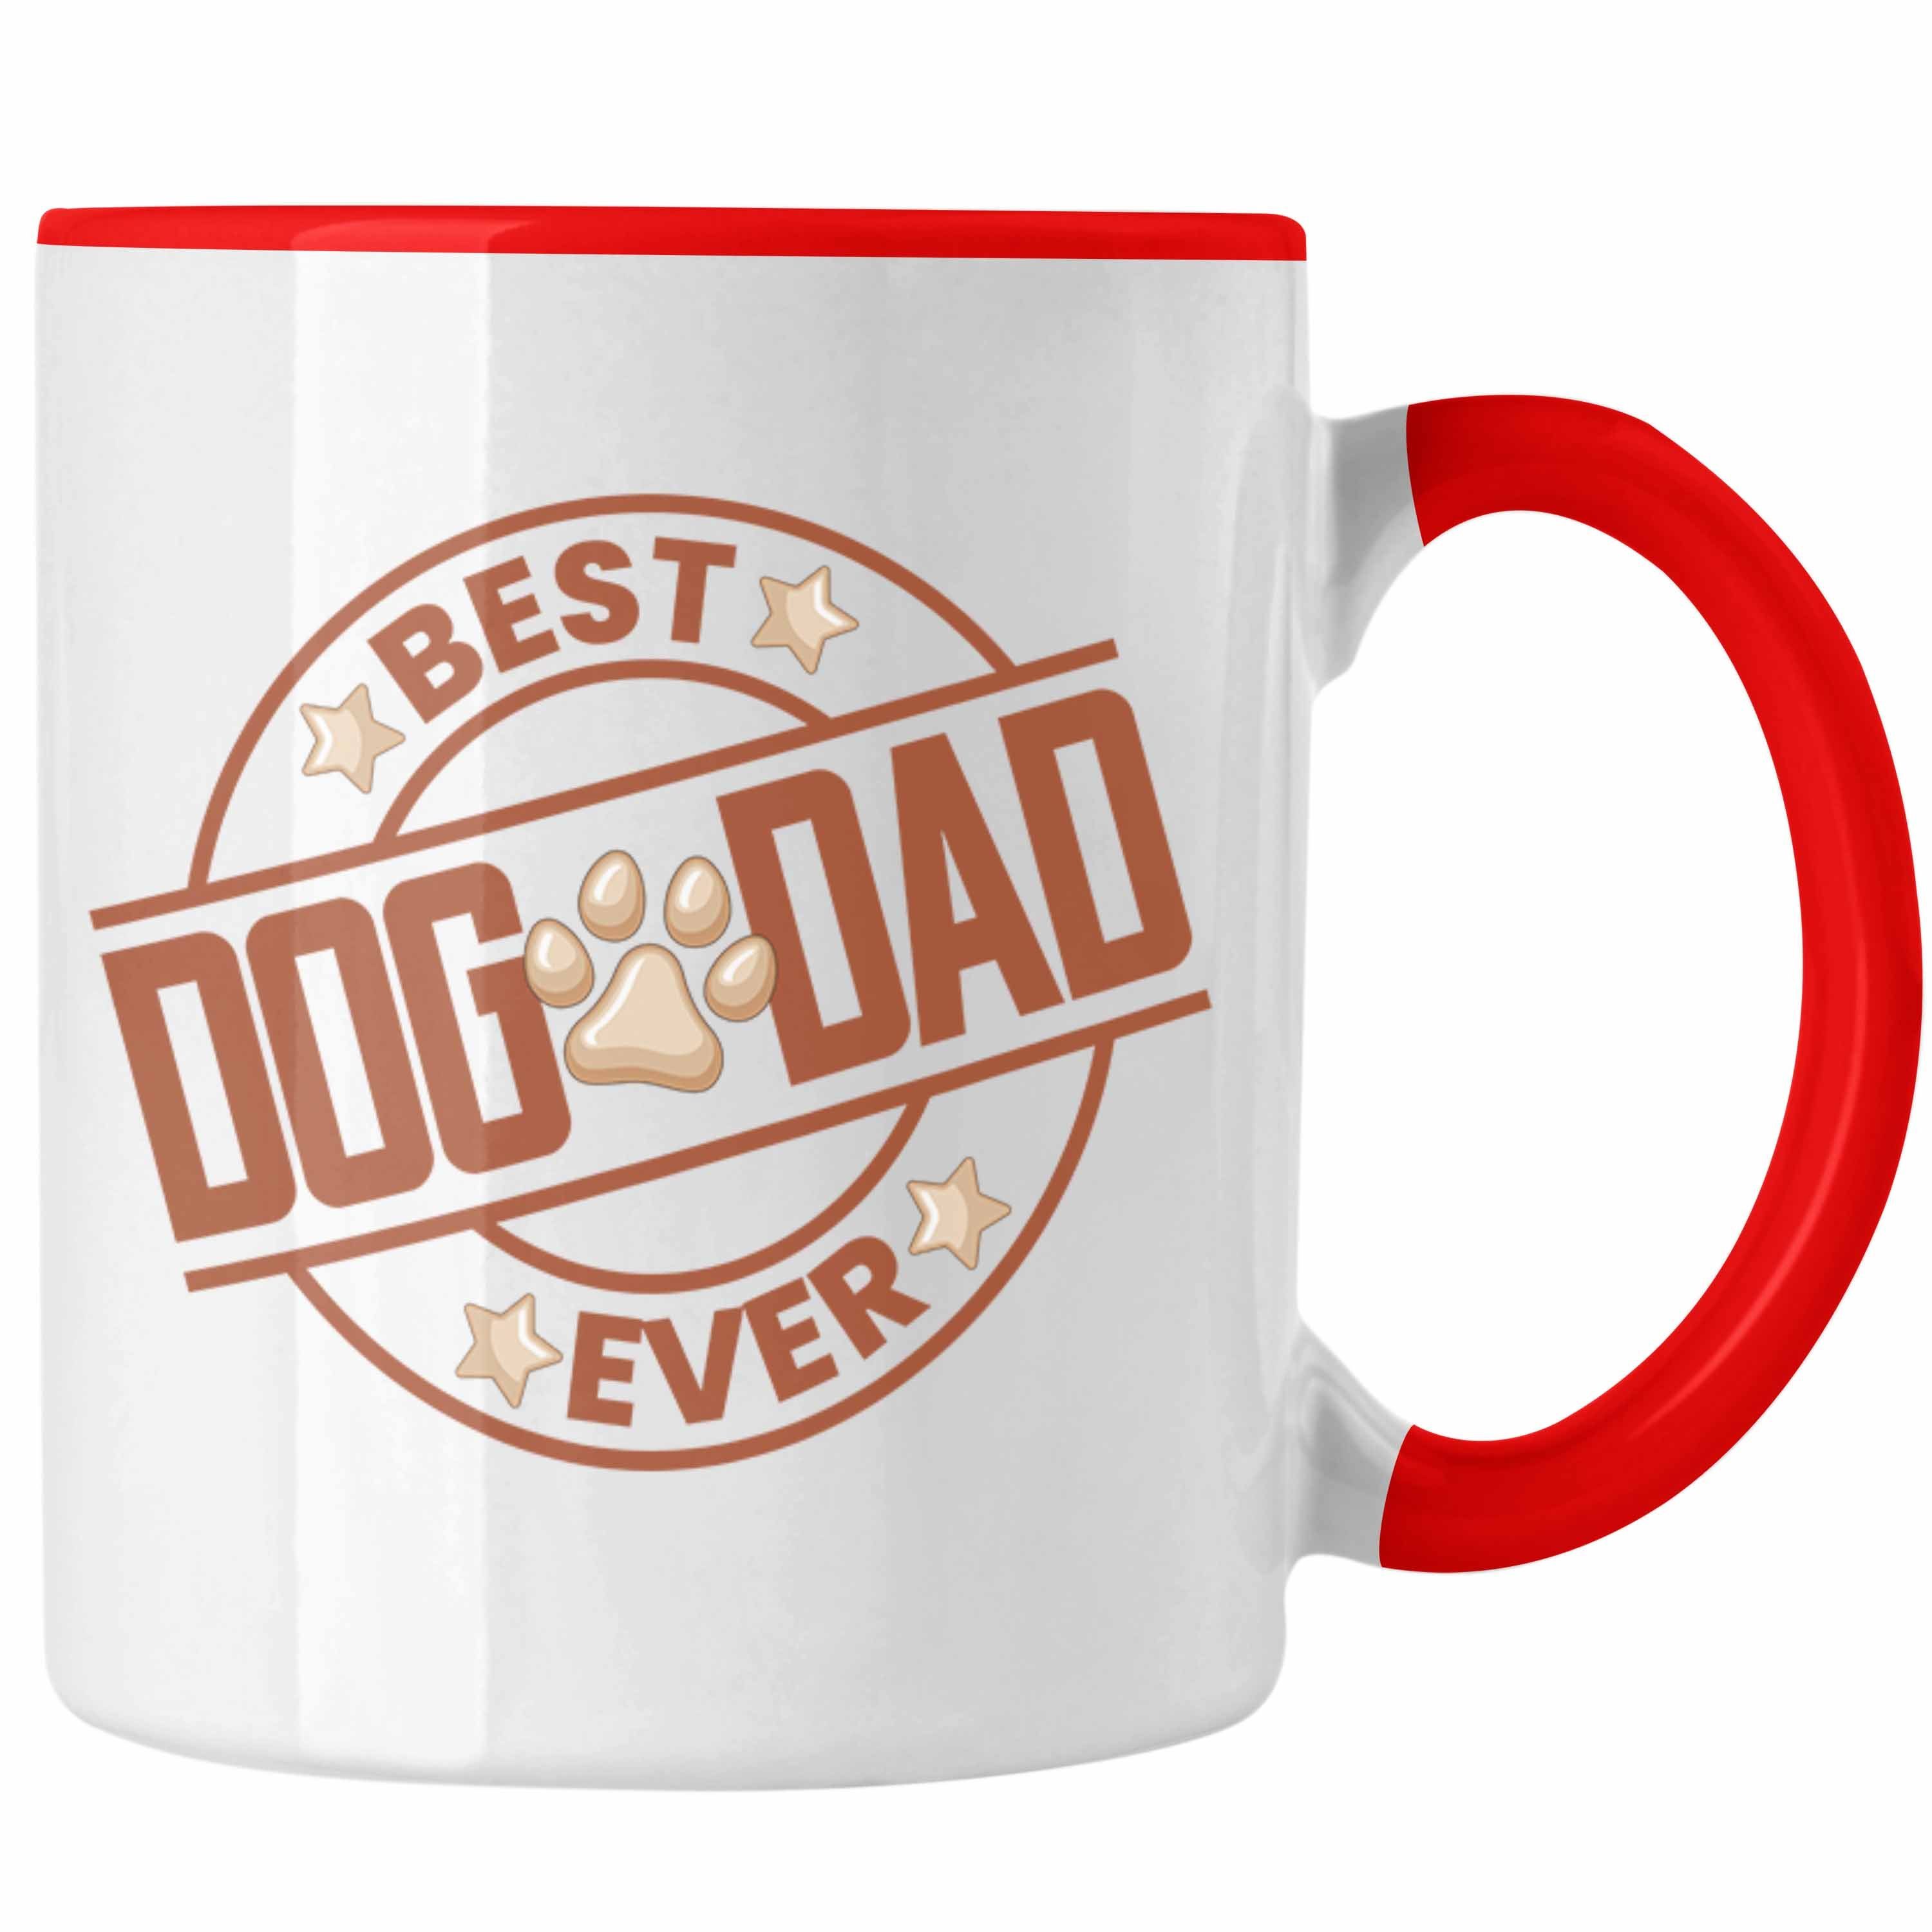 Trendation Tasse Trendation - Bester Hundepapa Ever Tasse Hunde Papa Dog Dad Geschenk Geschenkidee Rot